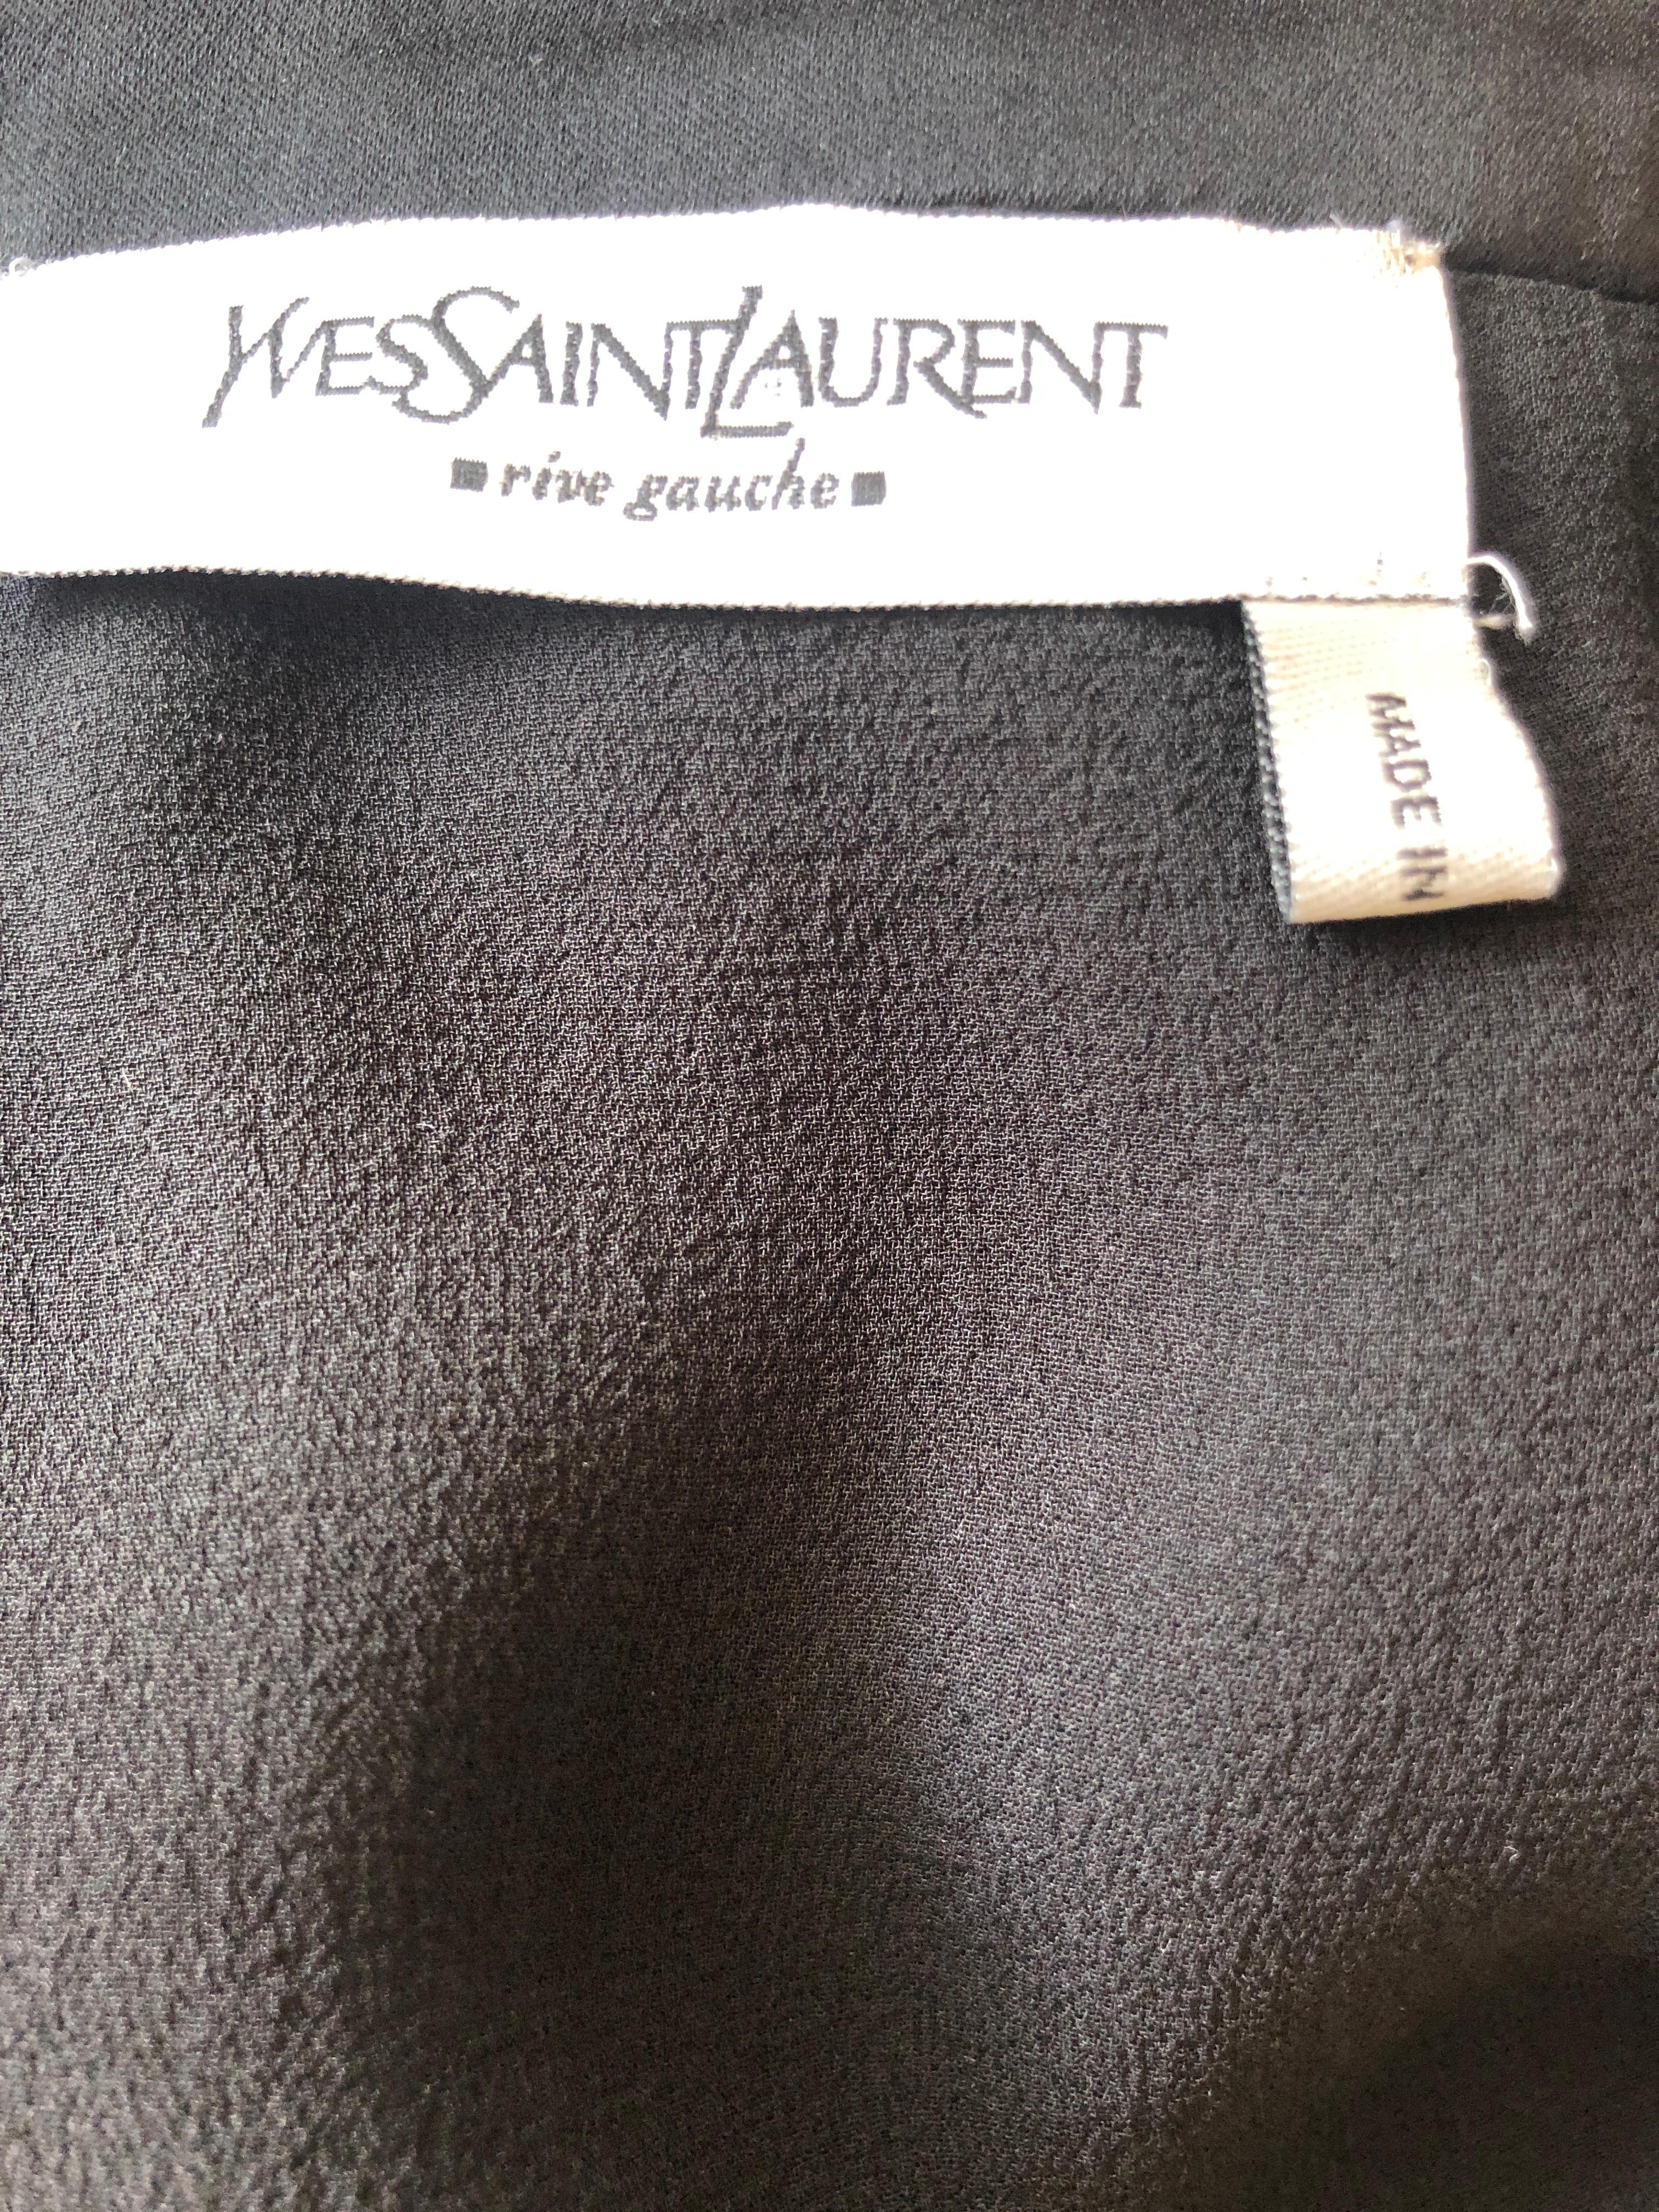 Yves Saint Laurent by Tom Ford 2004 Black Silk Skirt Size 40 For Sale 3